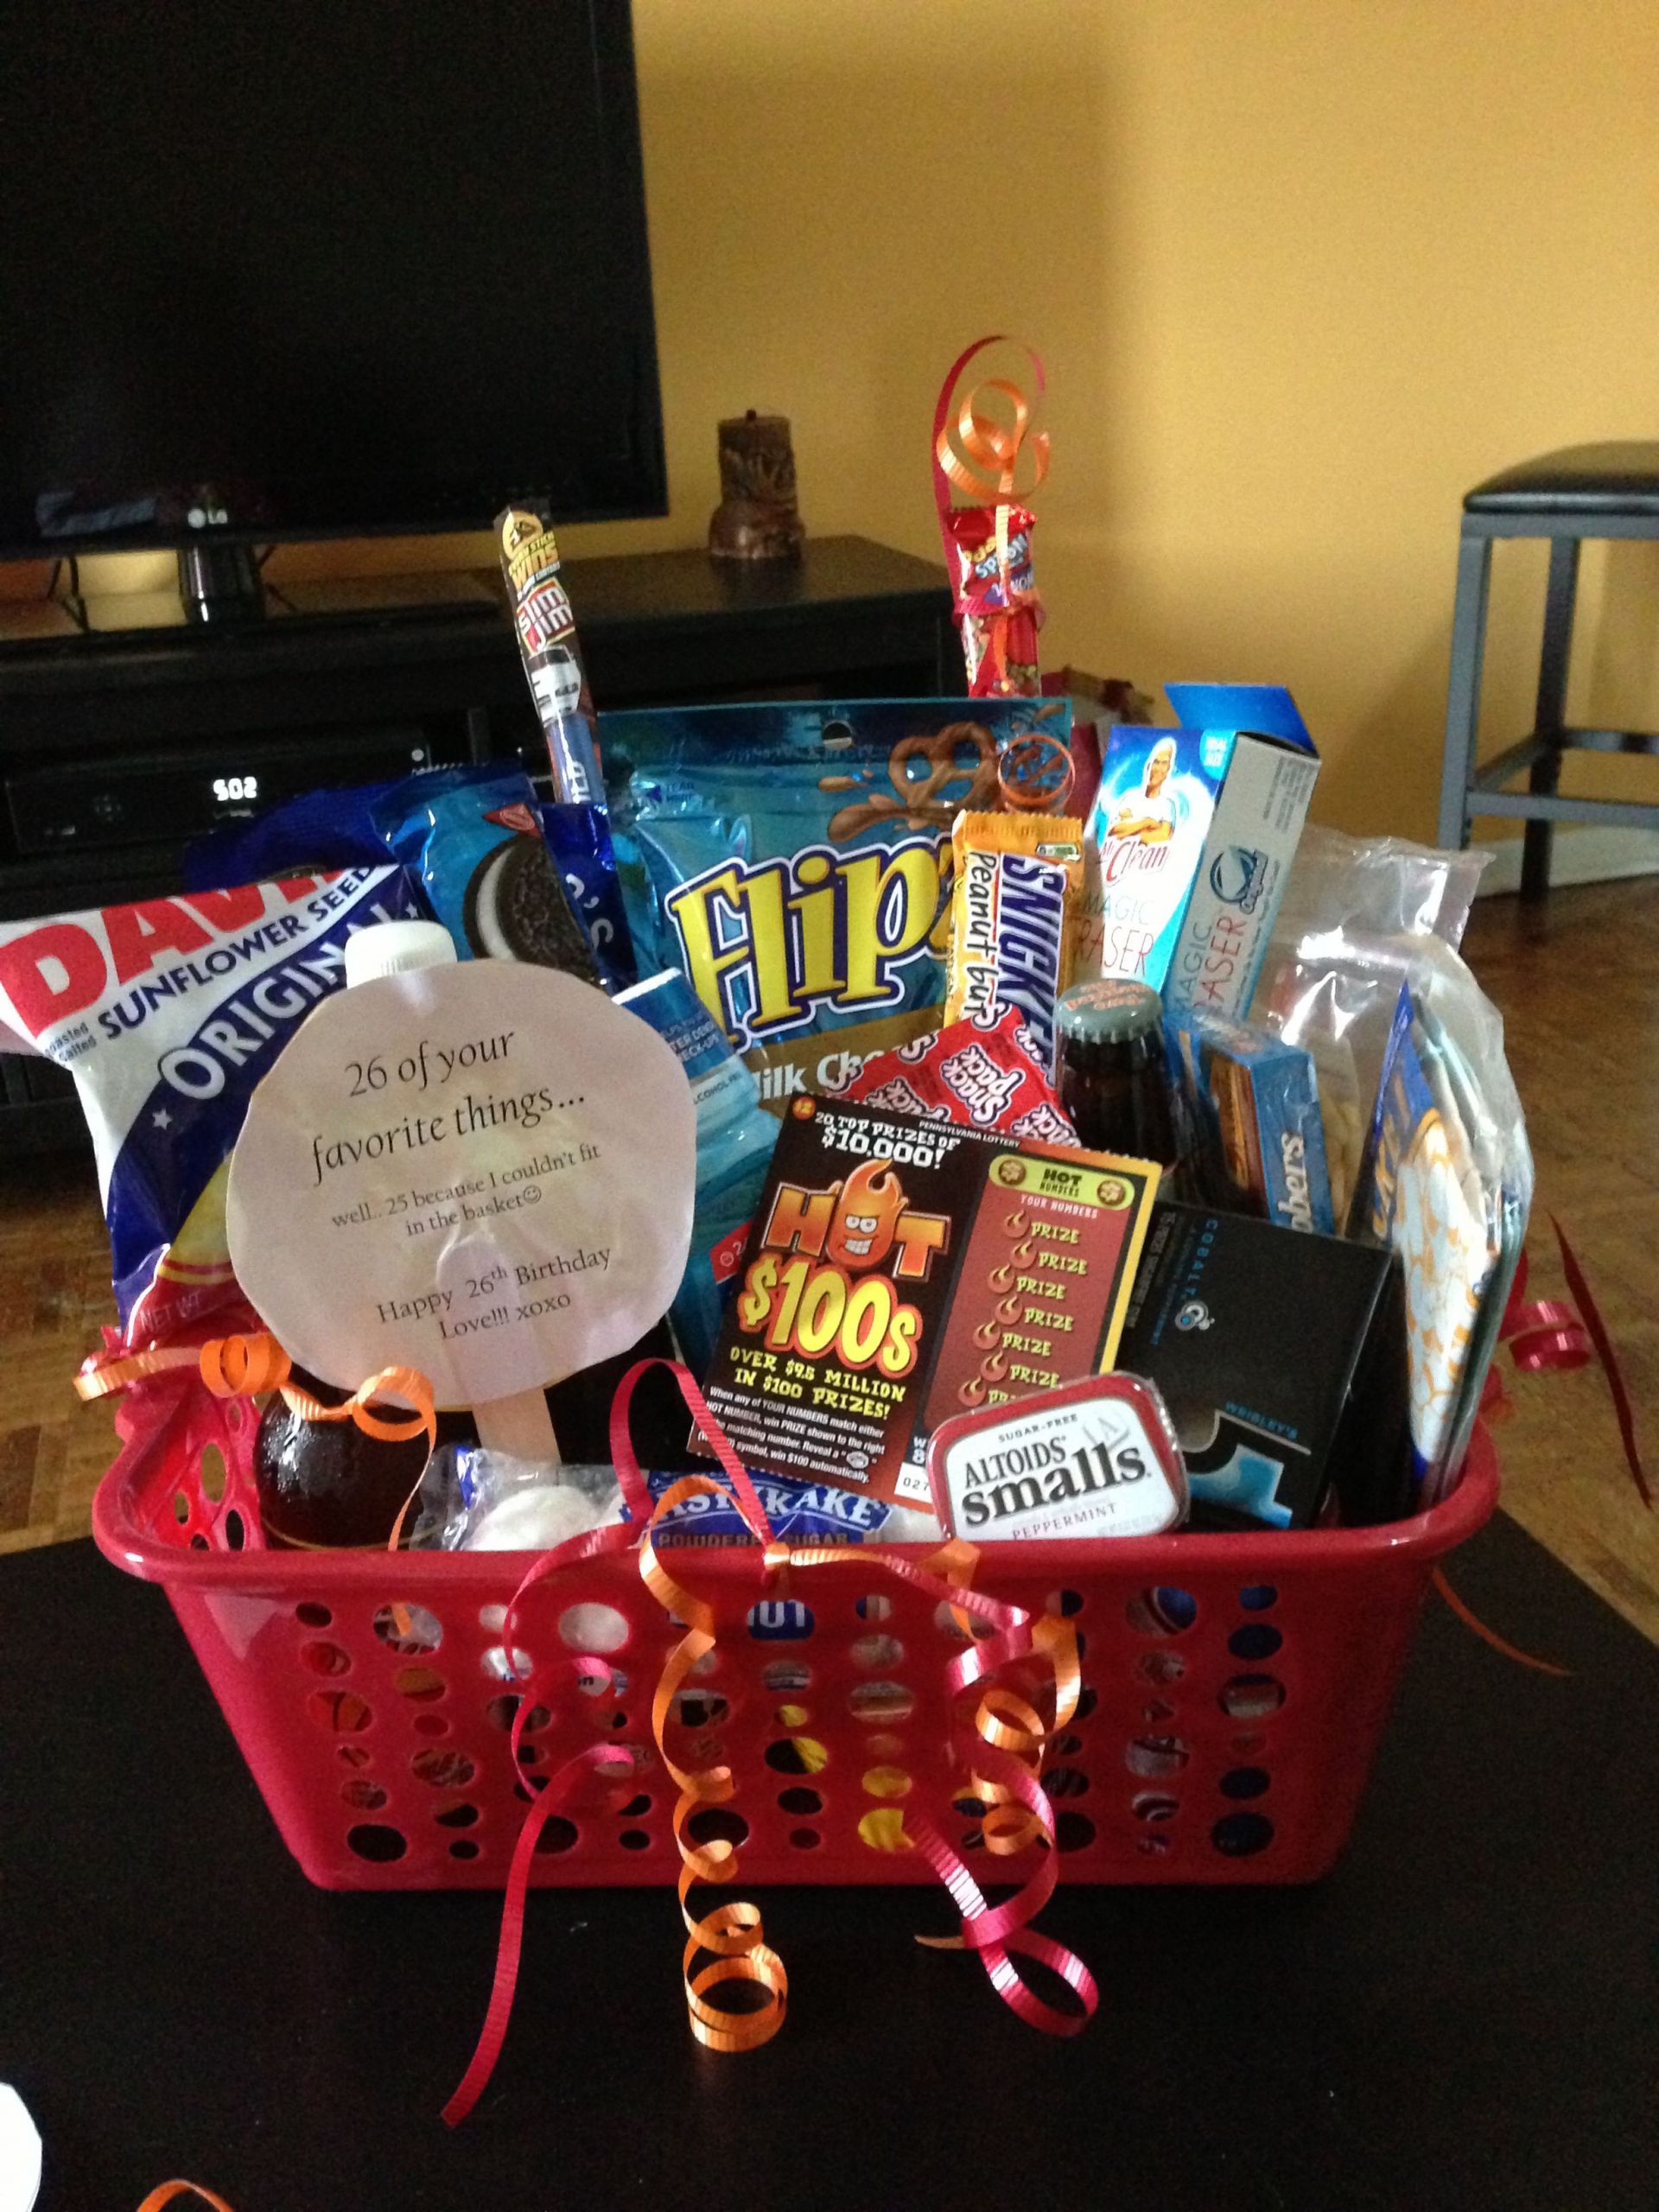 Best Birthday Gift For Boyfriend
 Boyfriend birthday basket 26 of his favorite things for